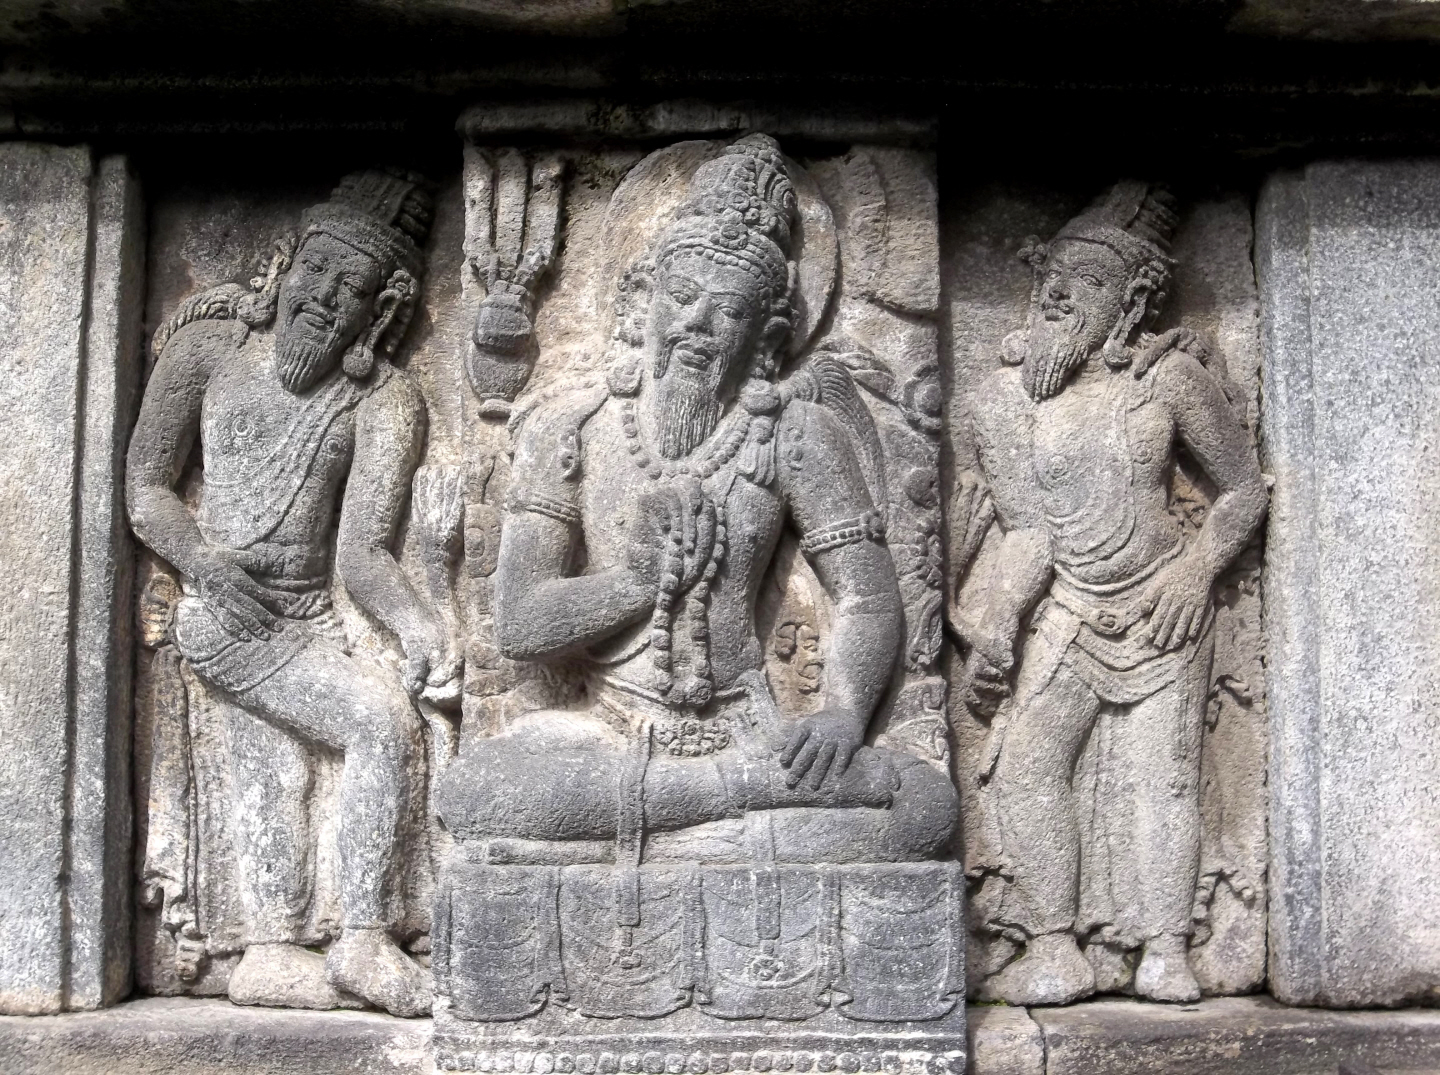 Prambanan - Hindu World Heritage Site (9th c.e.) South-Central Java